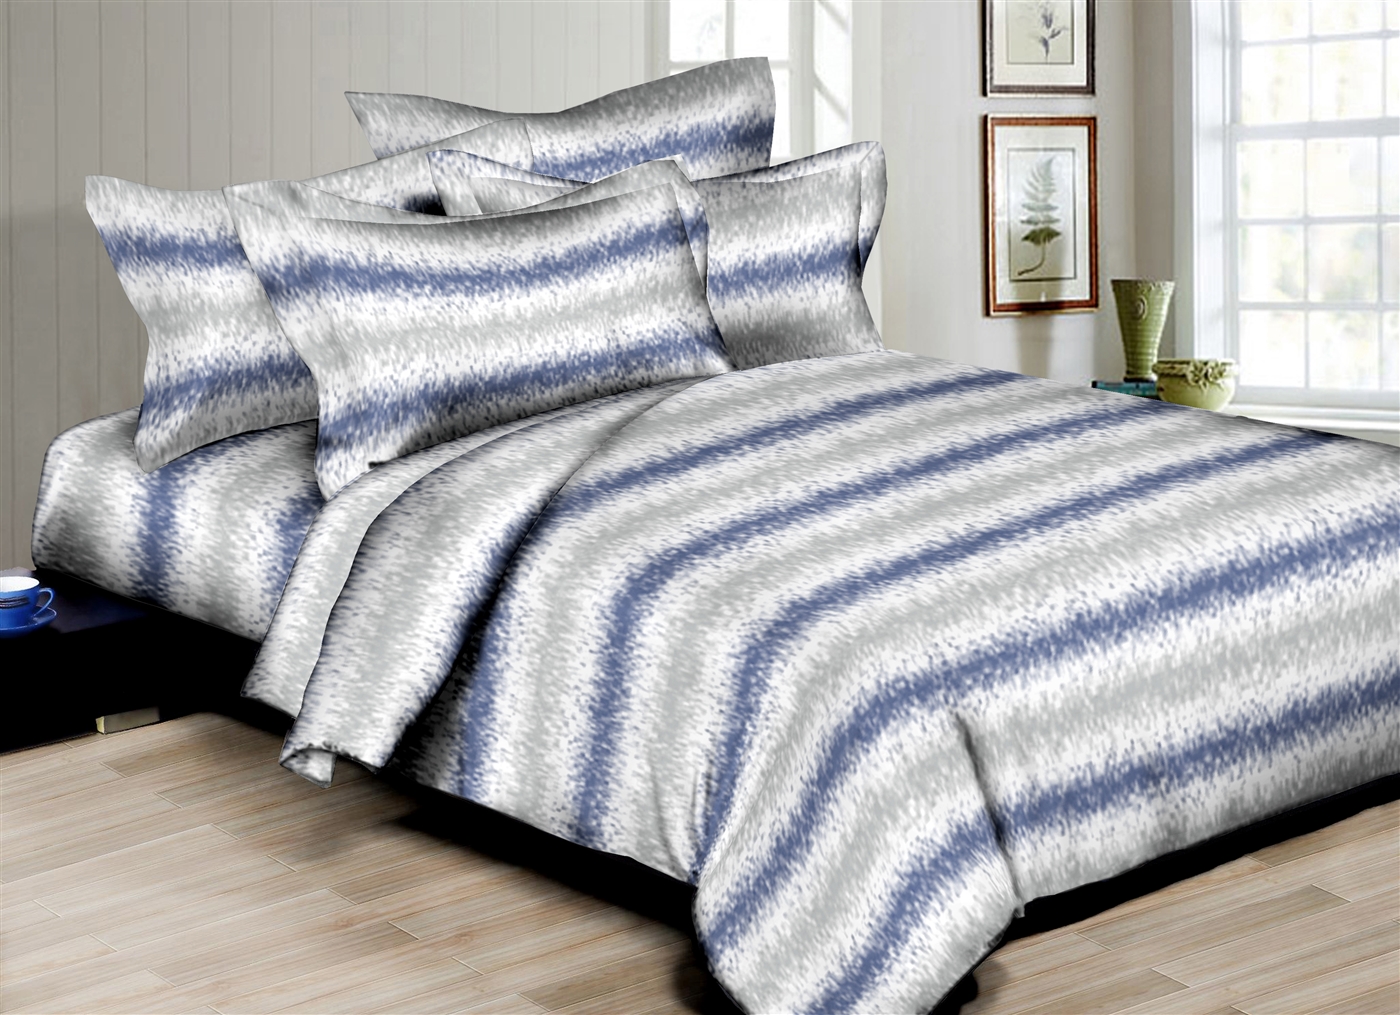 Superior Linen: Sprayed Stripes-Blue 6PC Twin Bedding Set